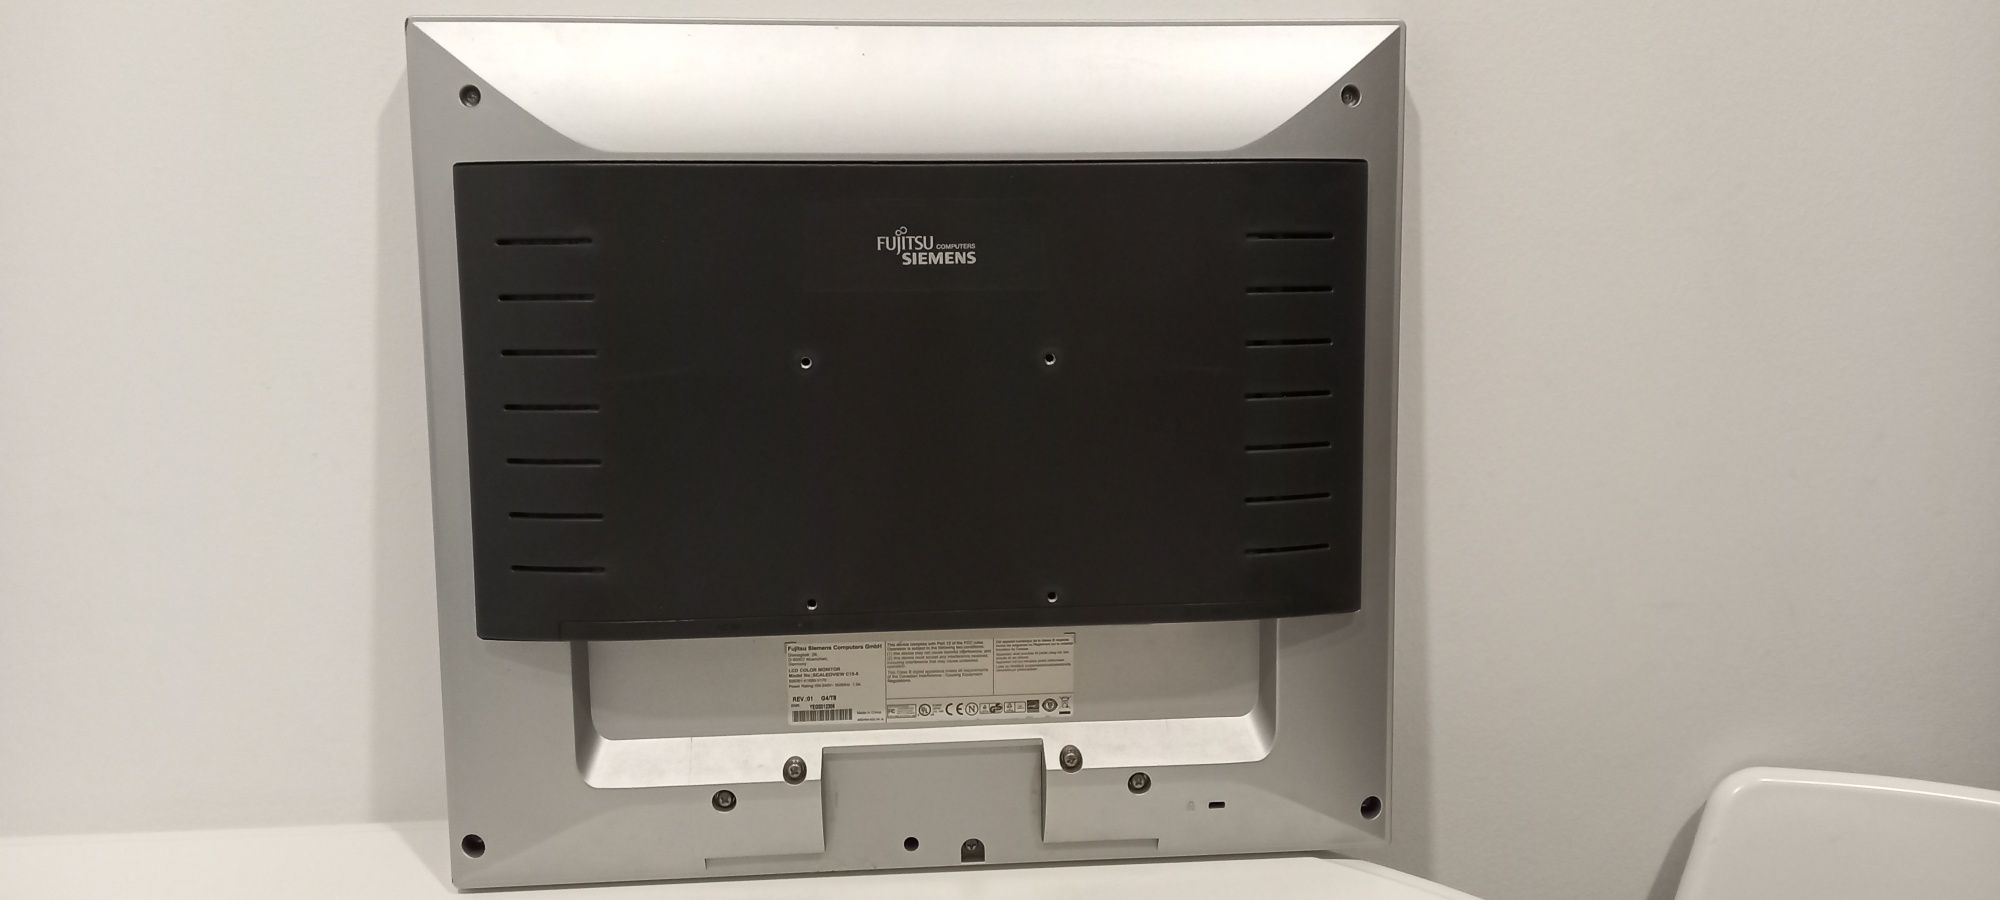 Monitor LCD Fujitsu Siemens